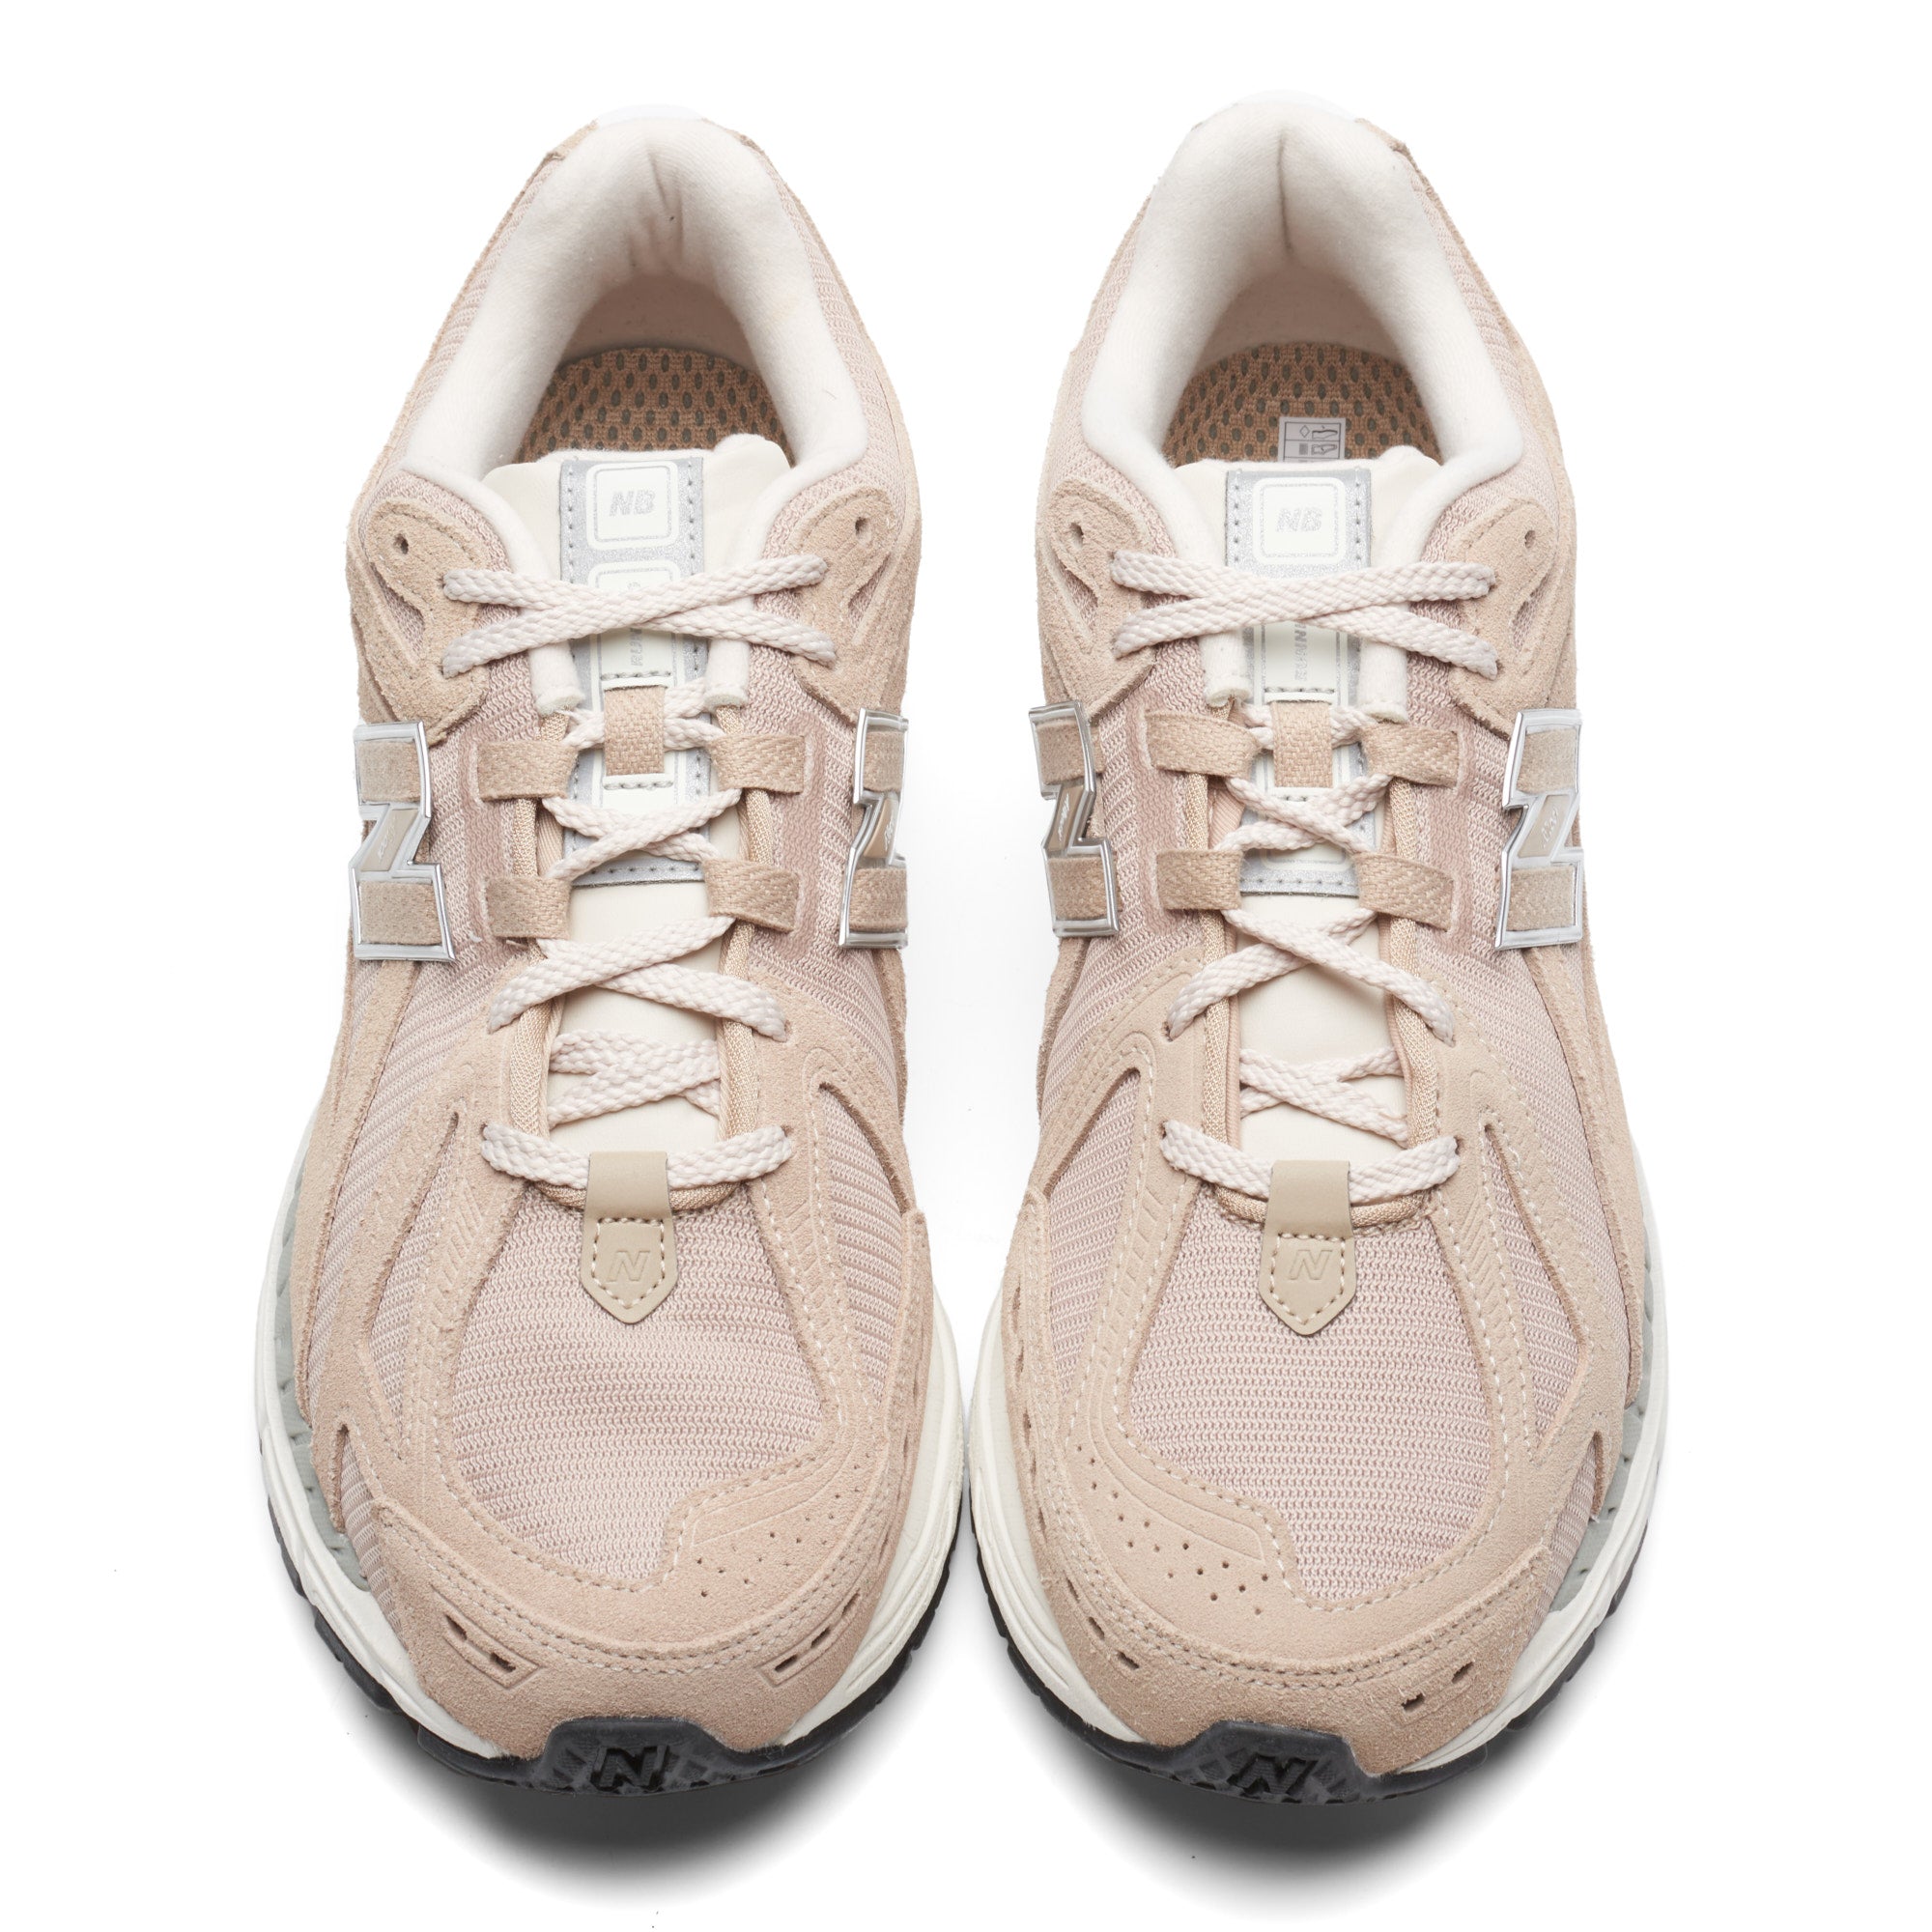 NEW BALANCE M1906RW Beige Running Sneakers Shoes UK 9.5 US 10 NEW NEW BALANCE